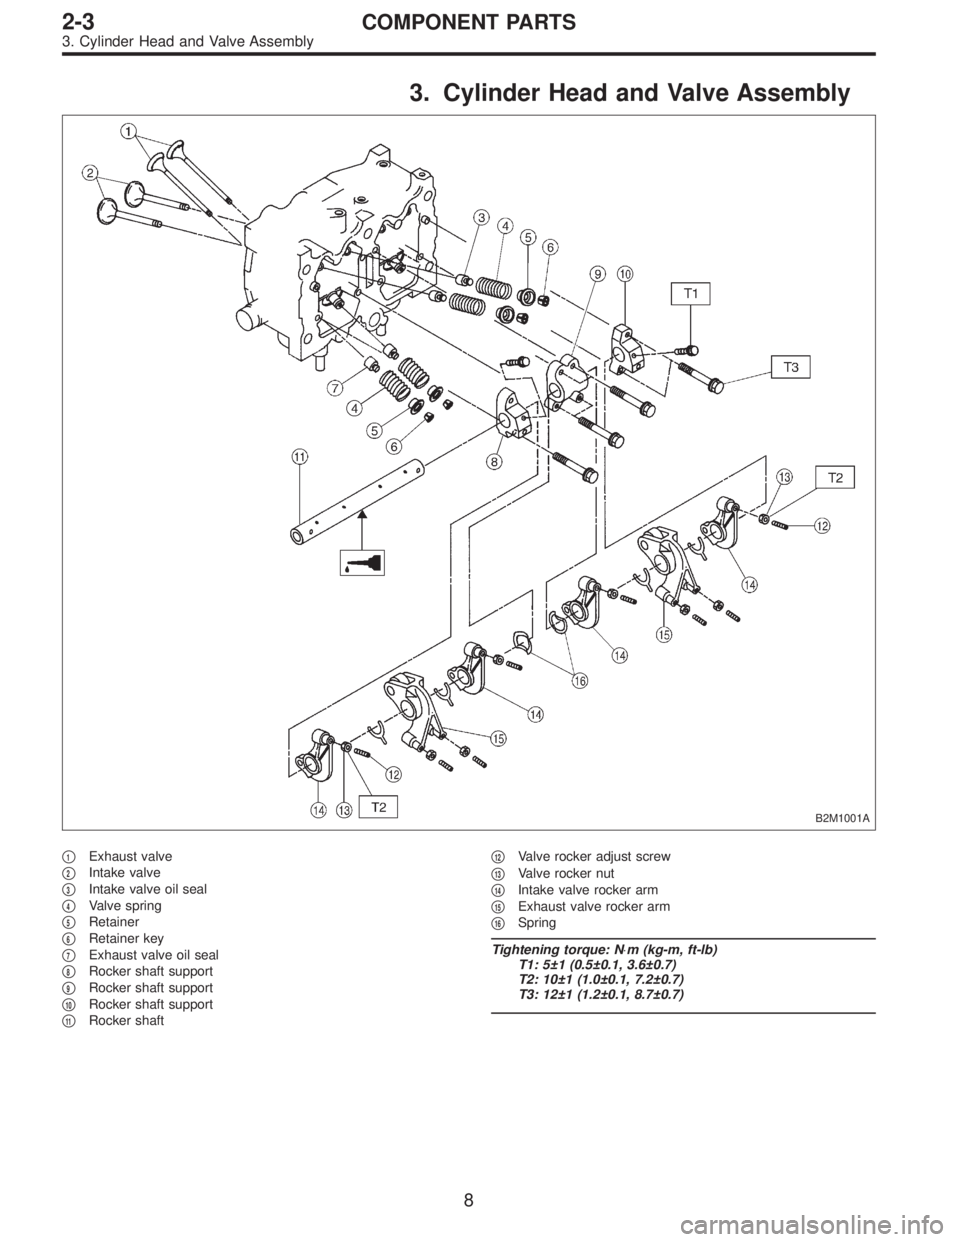 SUBARU LEGACY 1997  Service Repair Manual 3. Cylinder Head and Valve Assembly
B2M1001A
1Exhaust valve

2Intake valve

3Intake valve oil seal

4Valve spring

5Retainer

6Retainer key

7Exhaust valve oil seal

8Rocker shaft support

9R